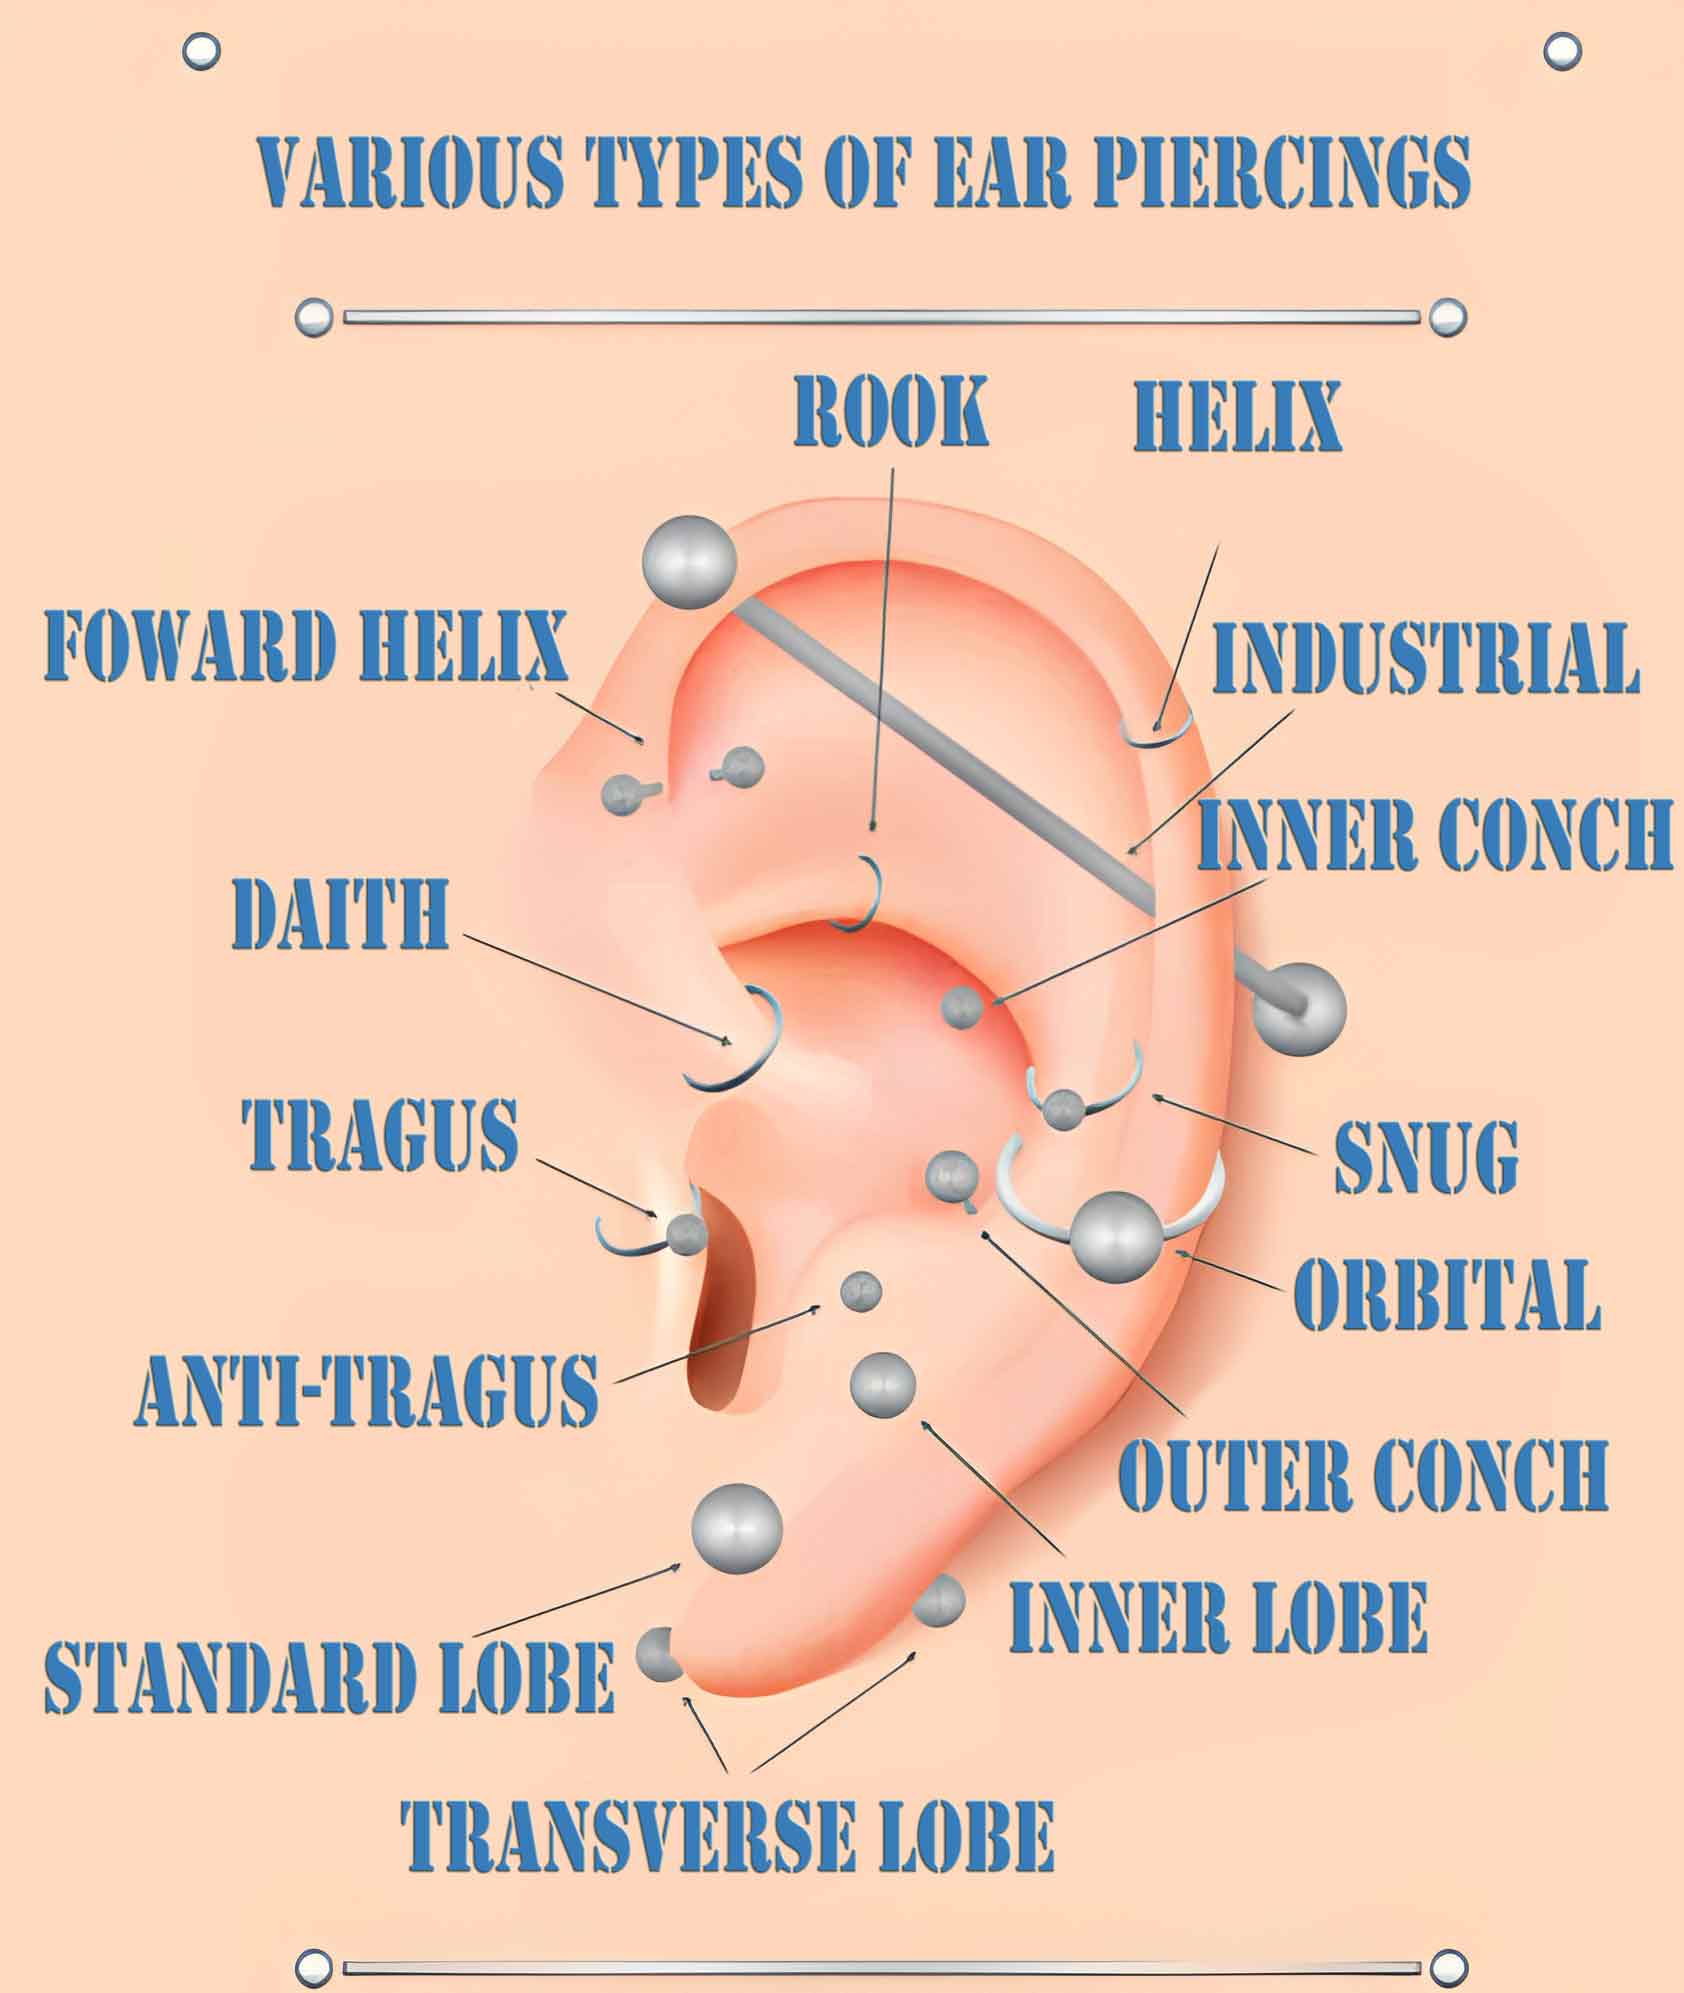 Types of ear piercings